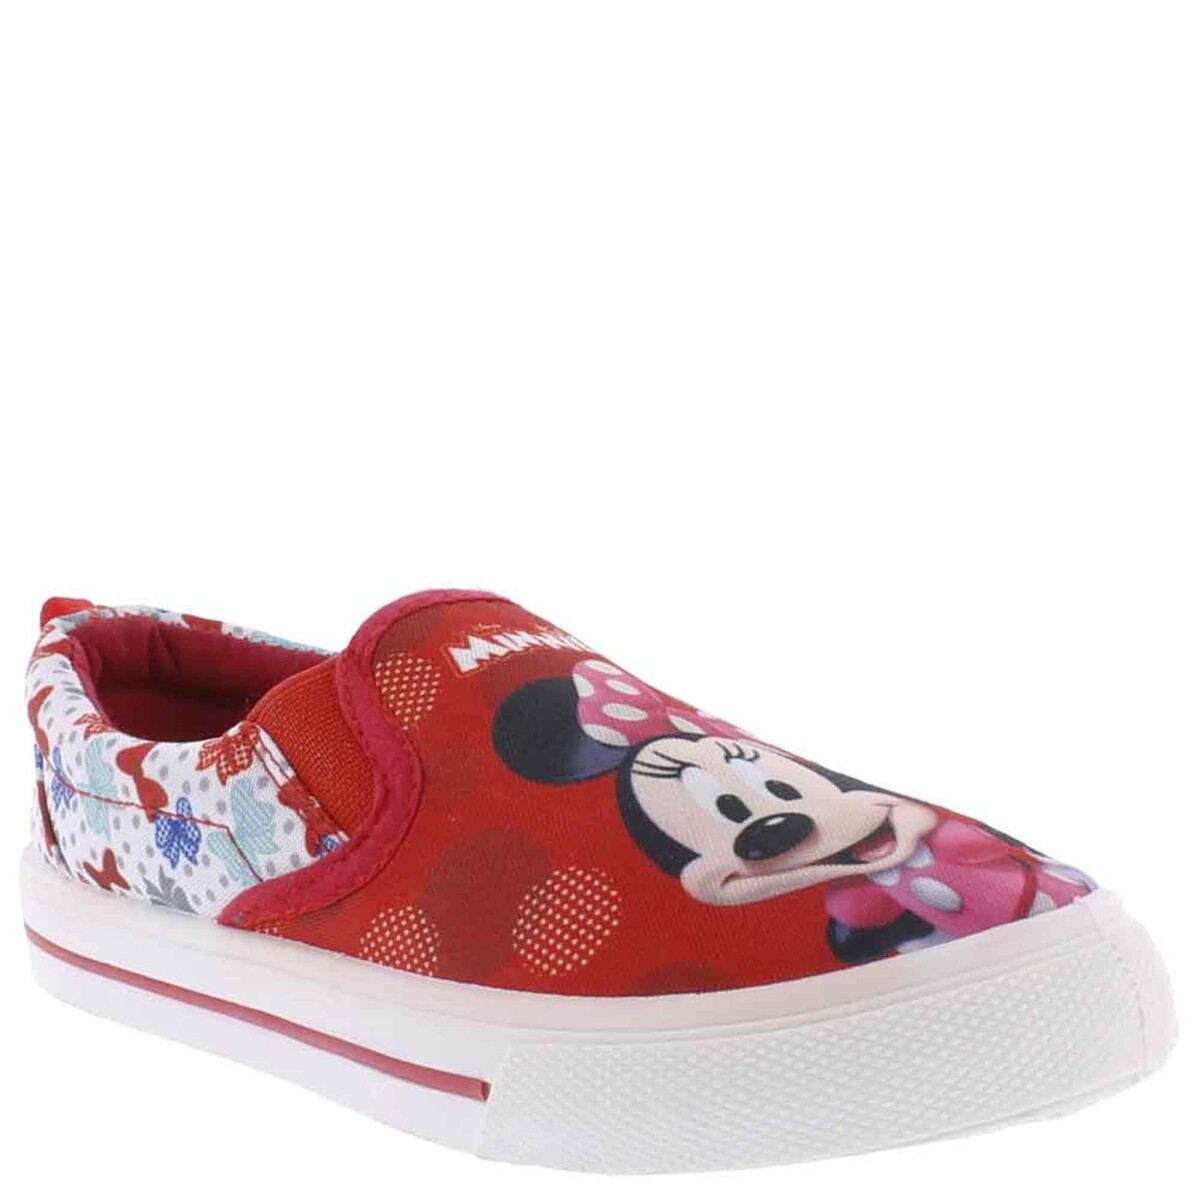 Pancha Minnie Disney - Rojo/Blanco 